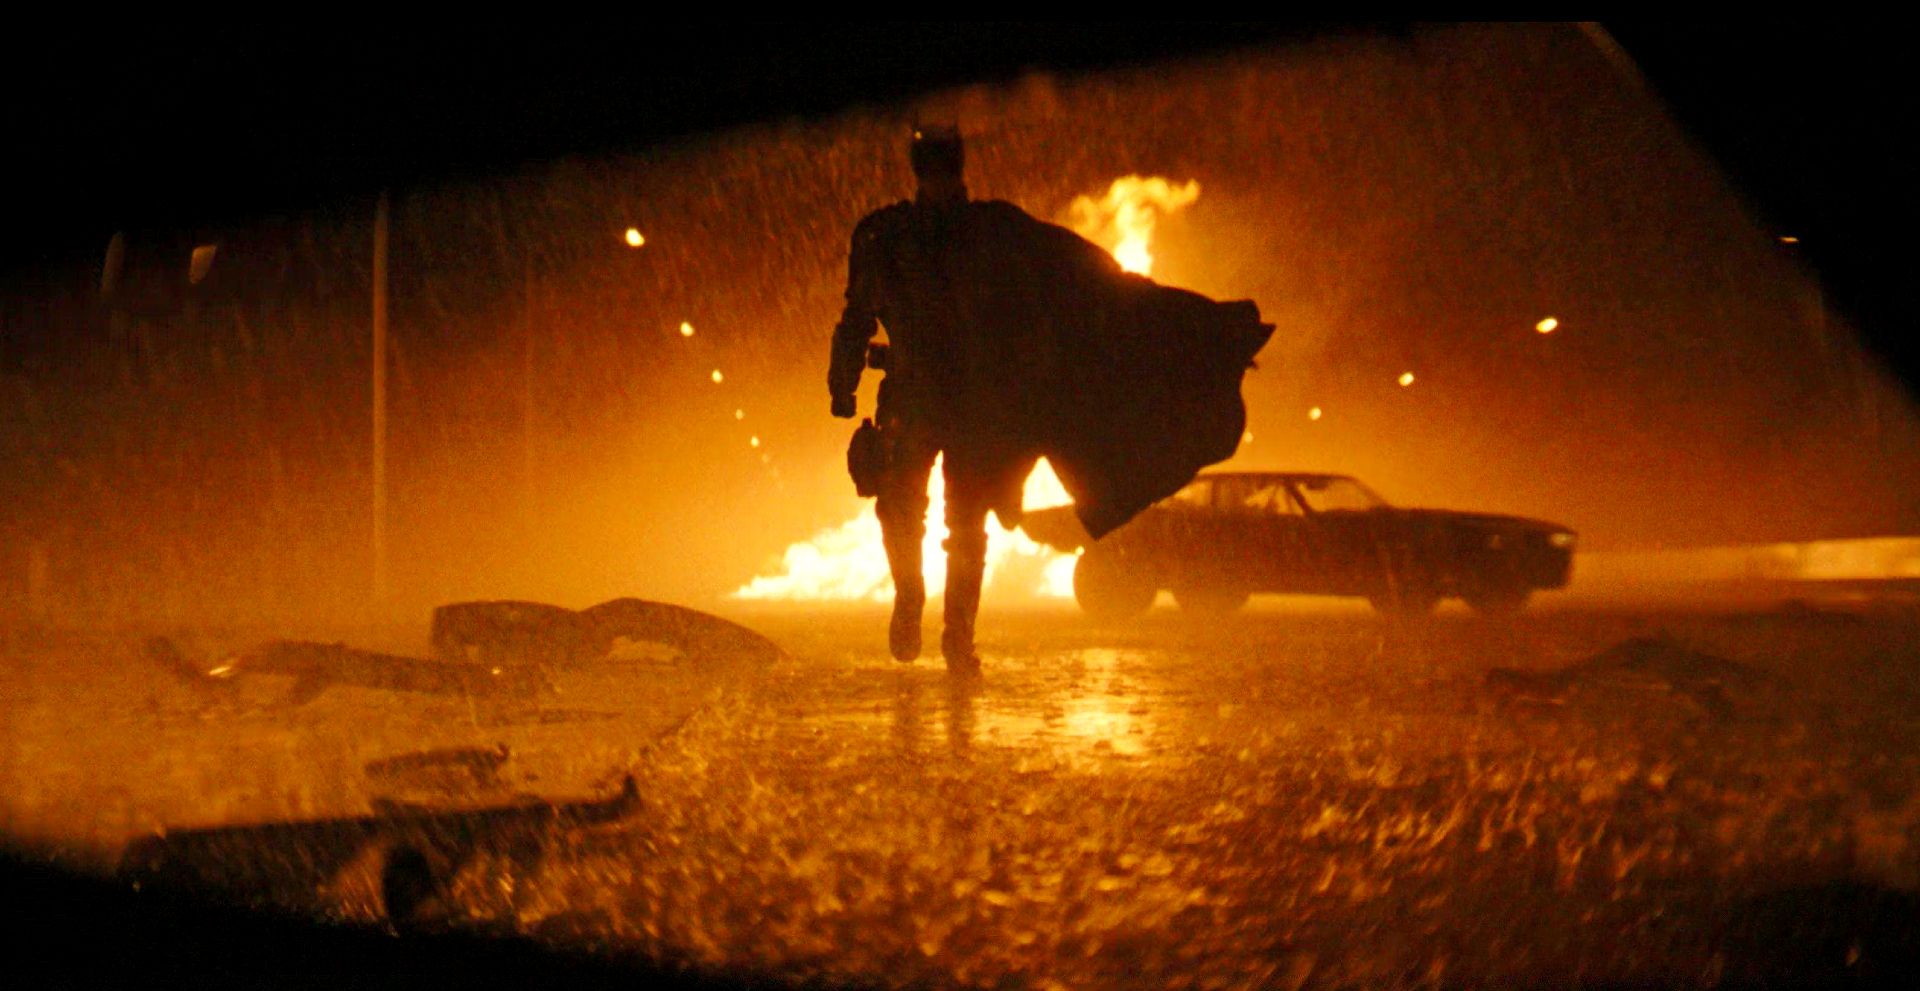 The Batman scene with Batman walking in front of the Batmobile